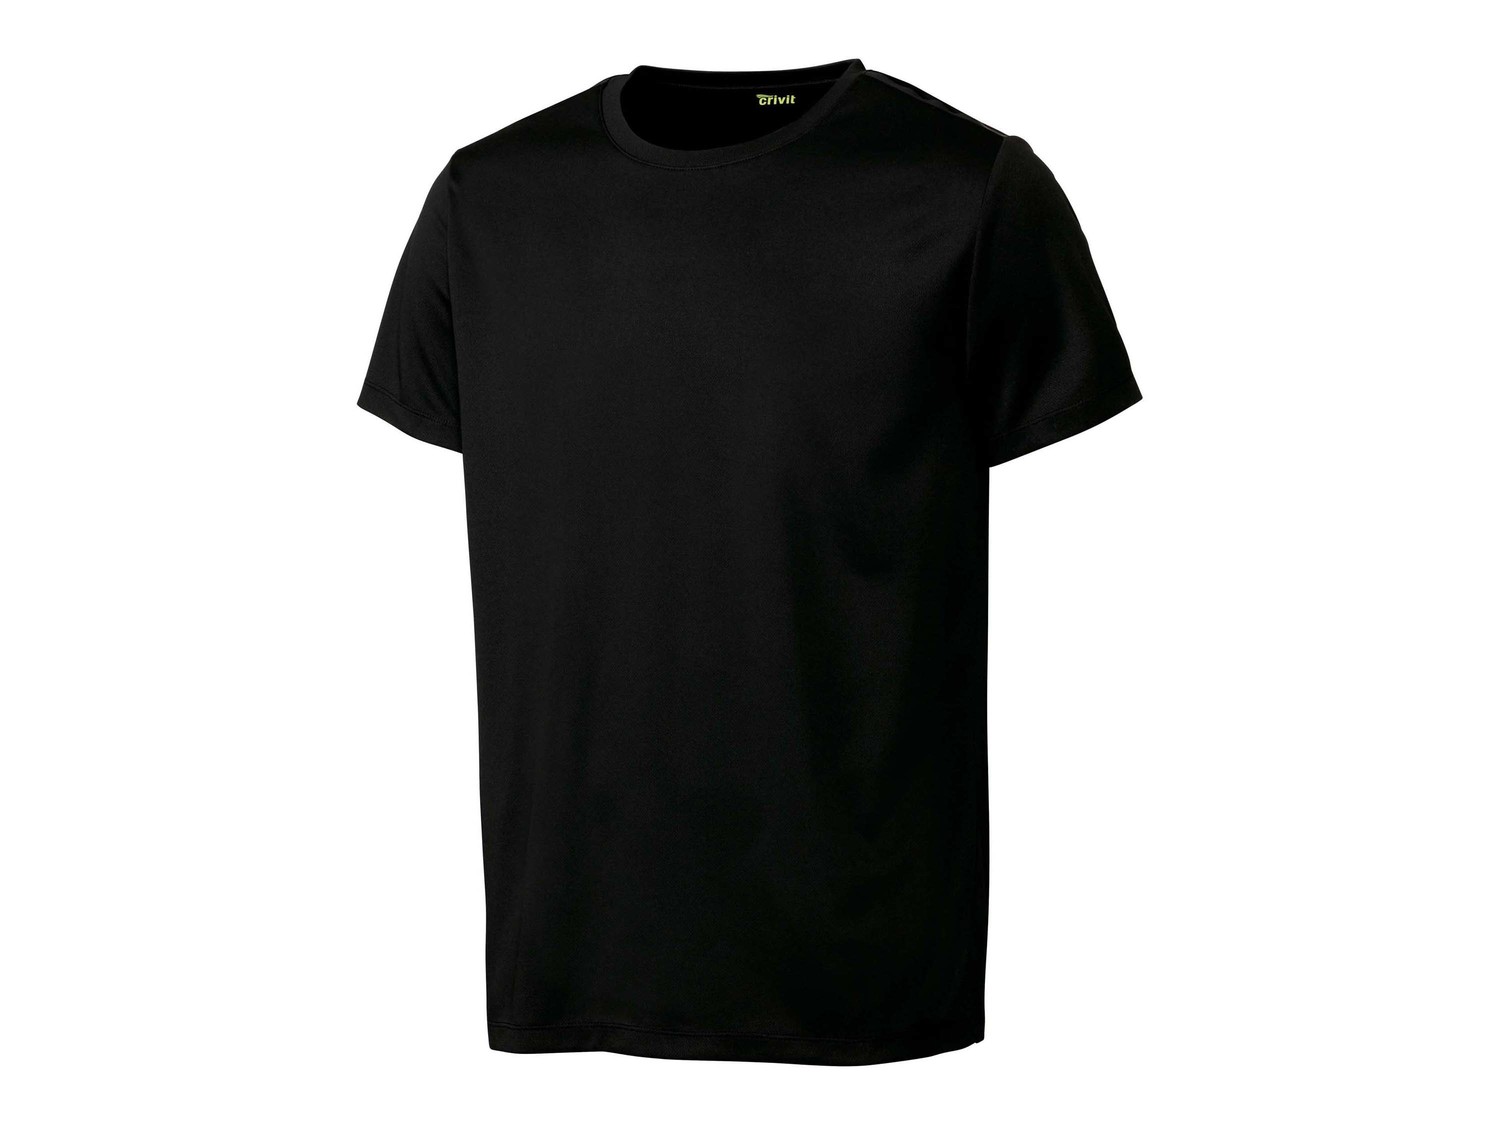 T-shirt sportiva da uomo Crivit, prezzo 4.99 &#8364;  
Misure: M-XL
- Oeko tex NEW